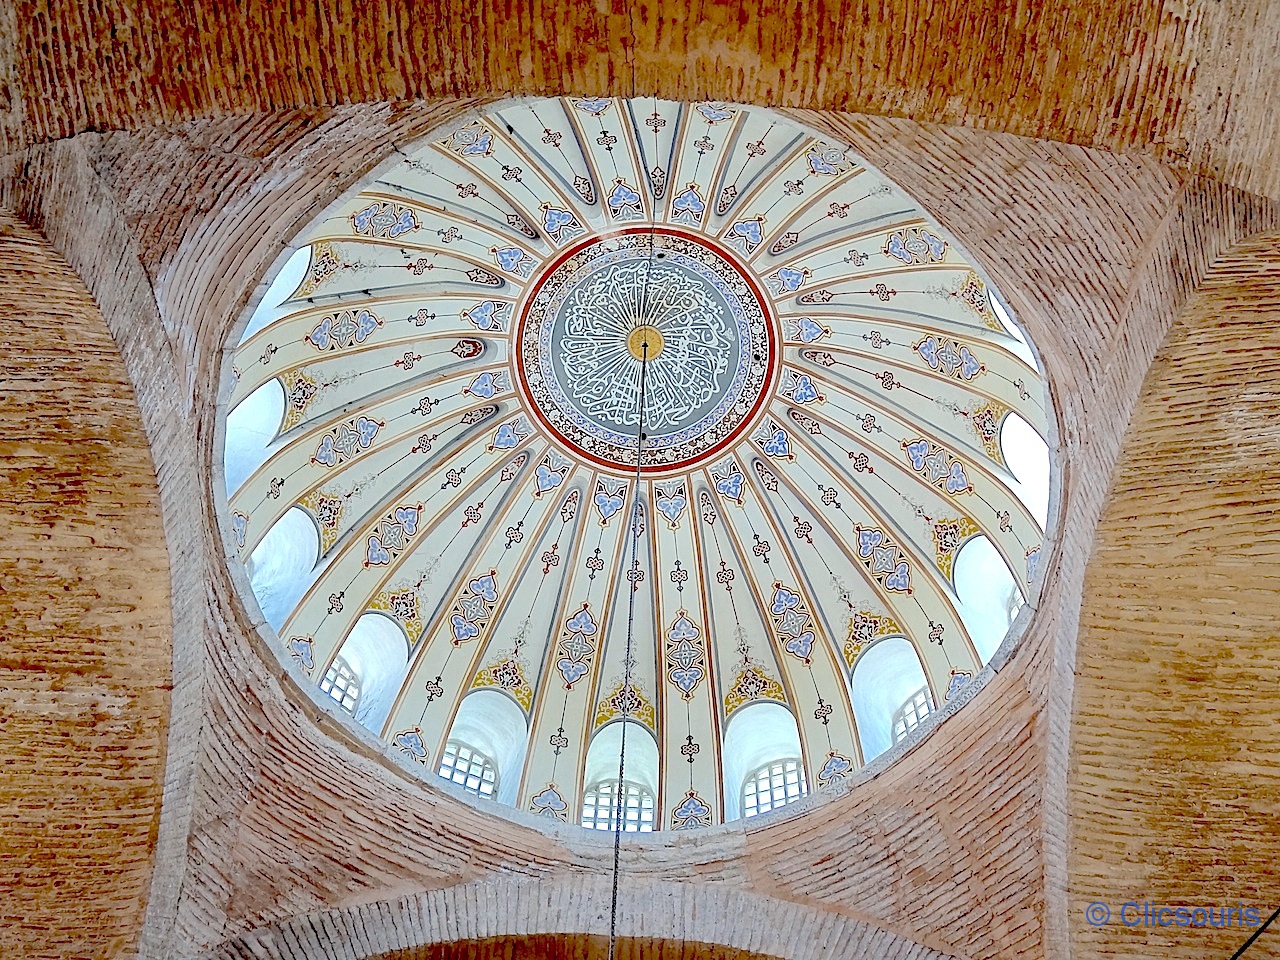 Istanbul mosquée de Kalender